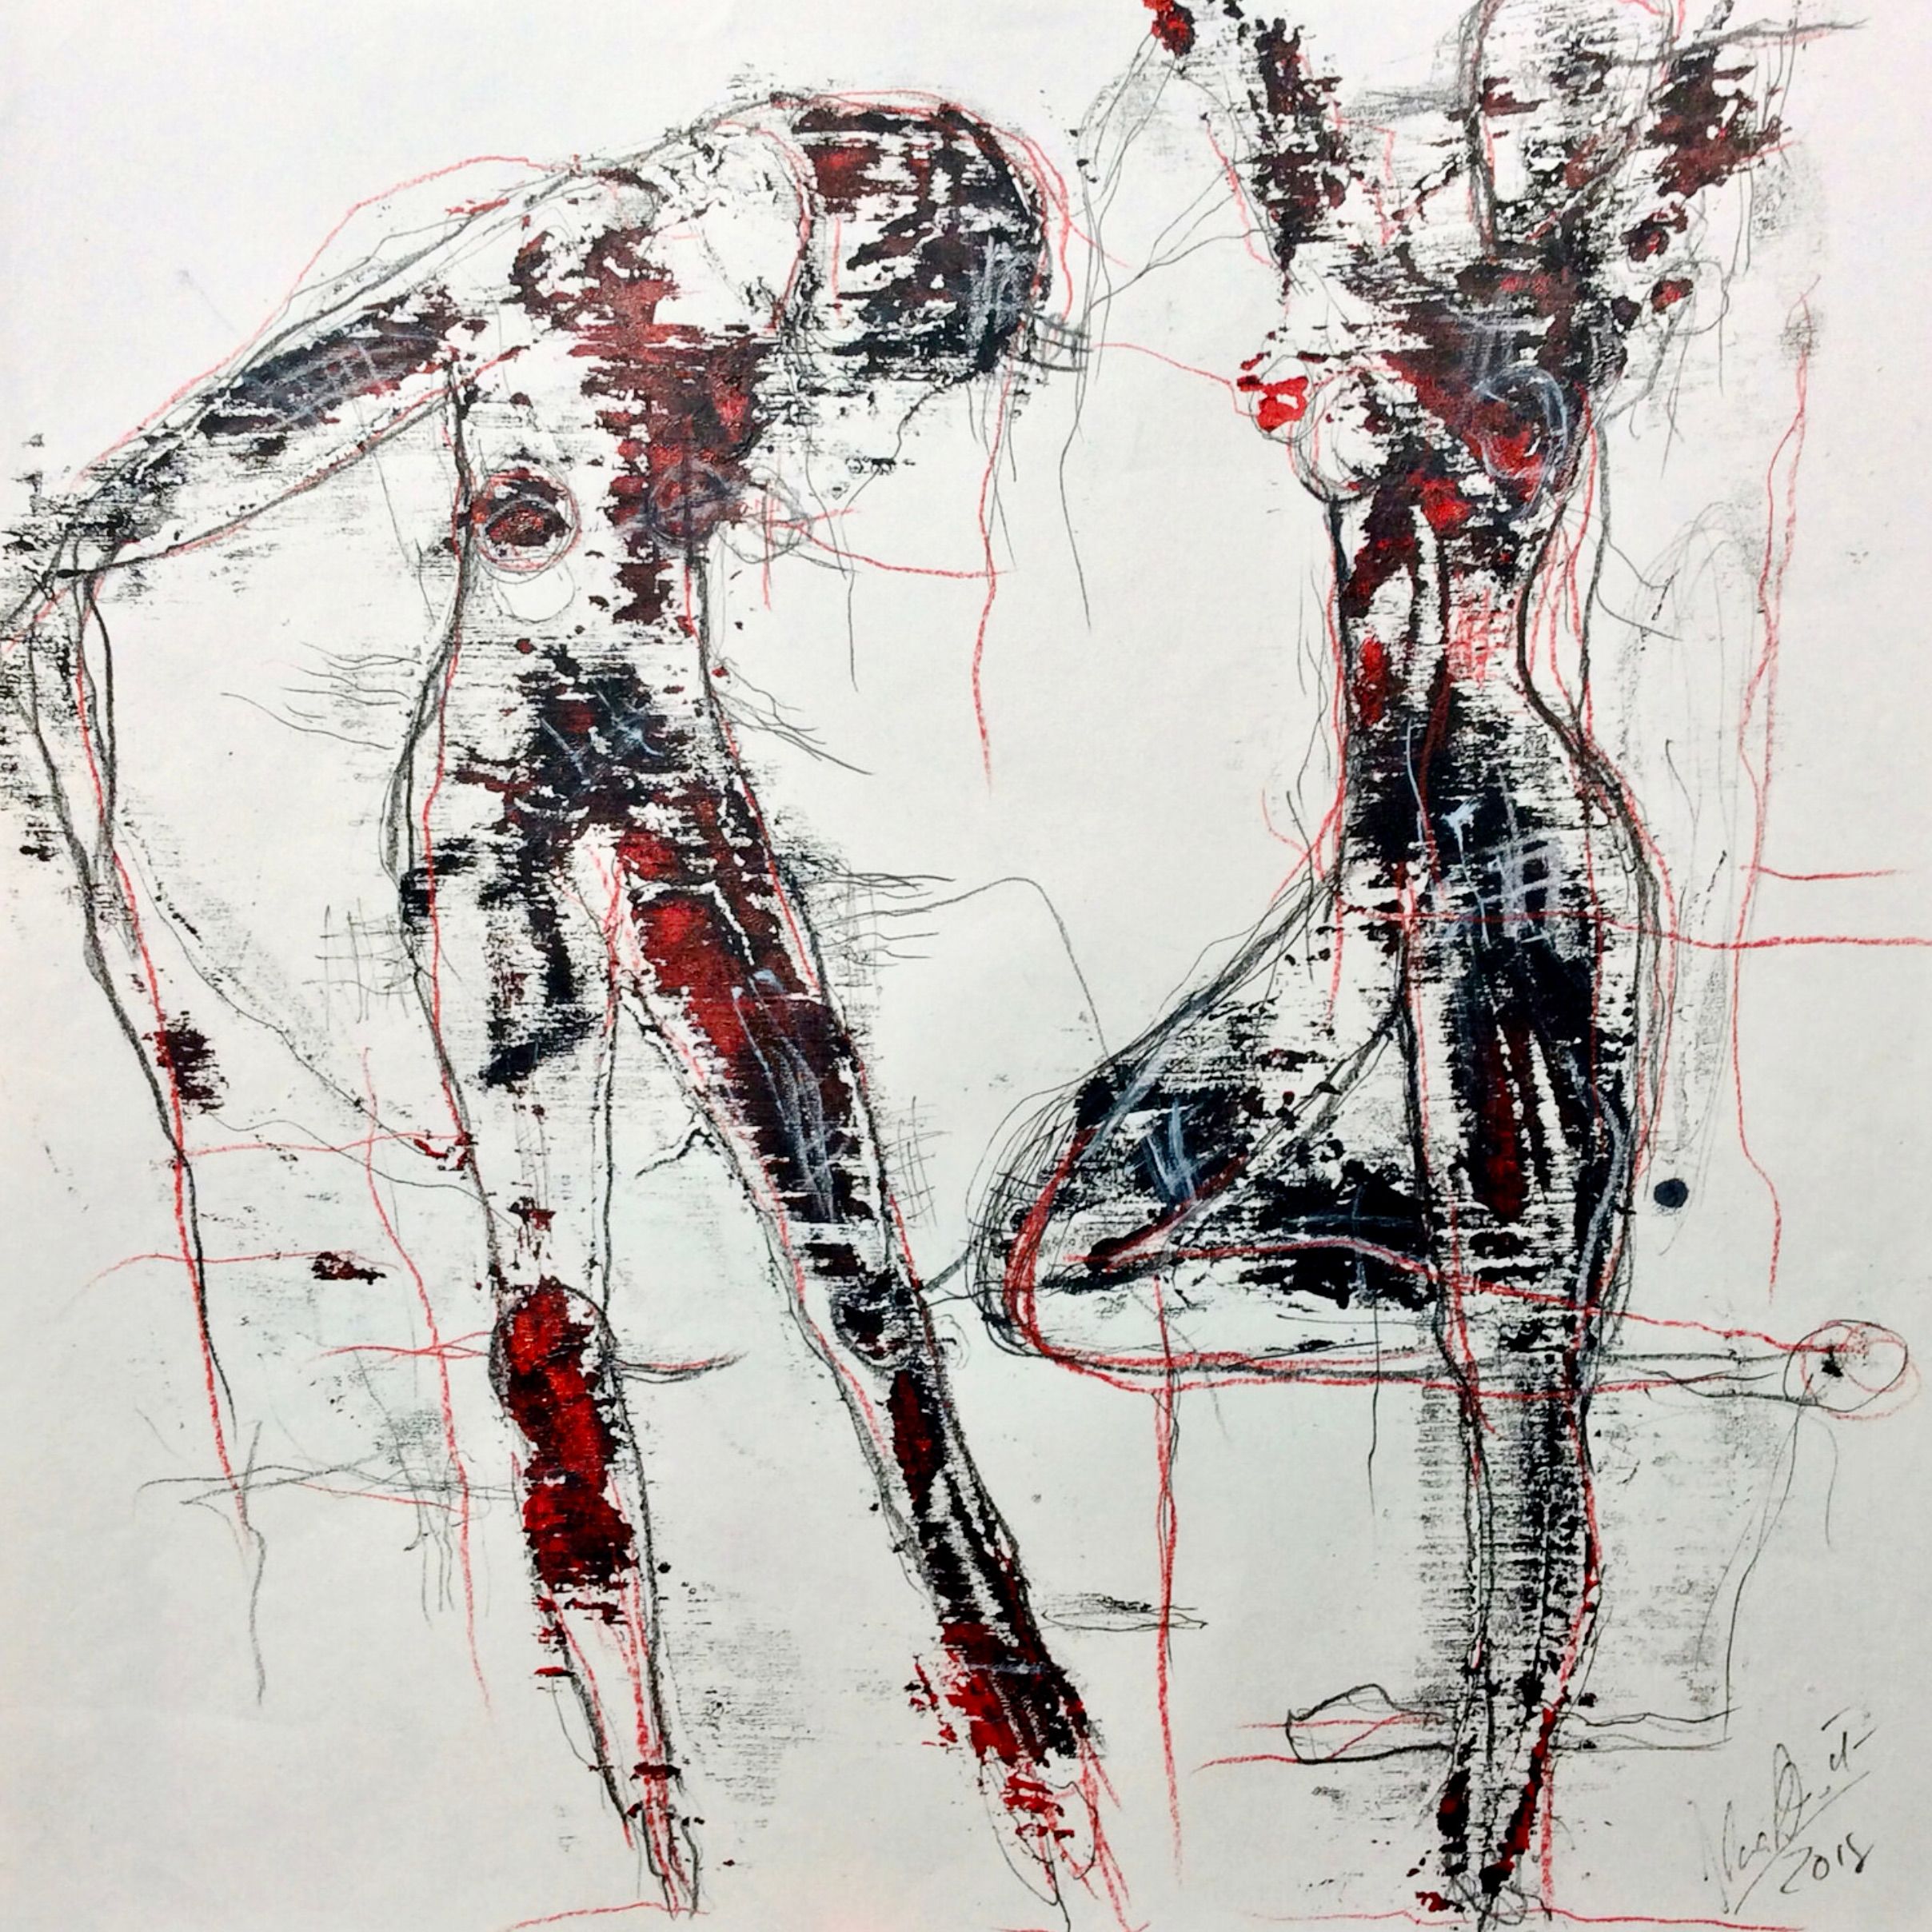 Ilona Schmidt的 "Monoprint No. 20 "半抽象的肖像画/素描展示了两个赤裸的女性身体。这幅画以黑色、白色和飞溅的红色为主色调。